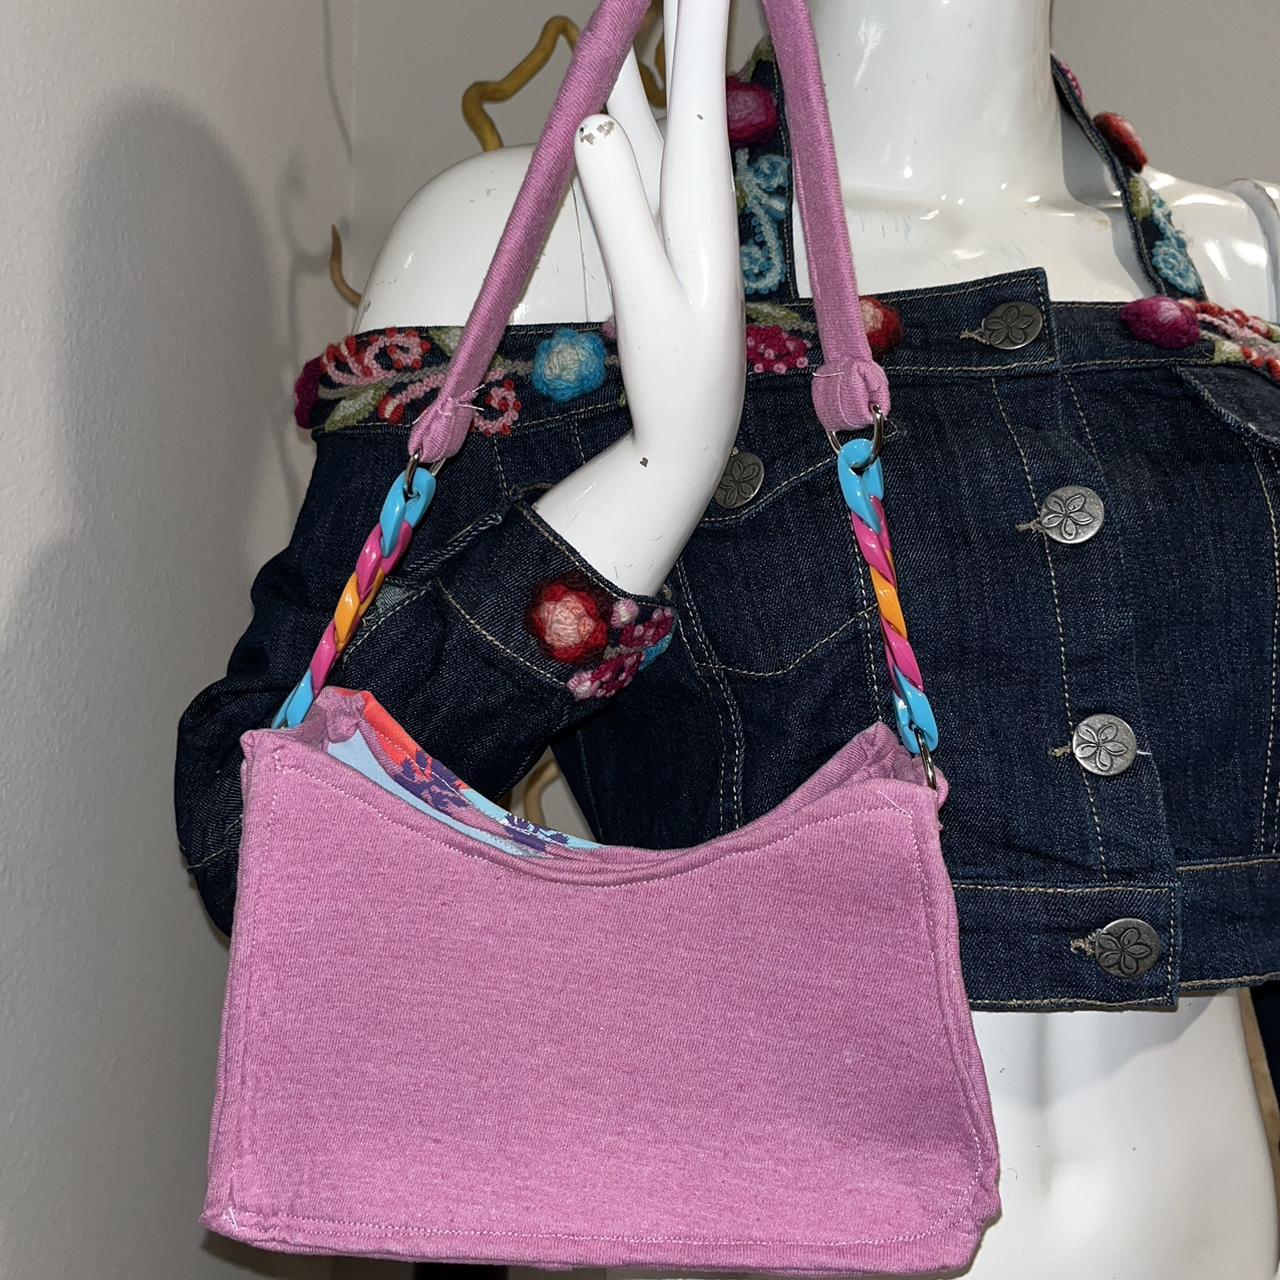 Barbie x Skinnydip Pink Fluff Tote Bag | Girly bags, Fancy bags, Bags